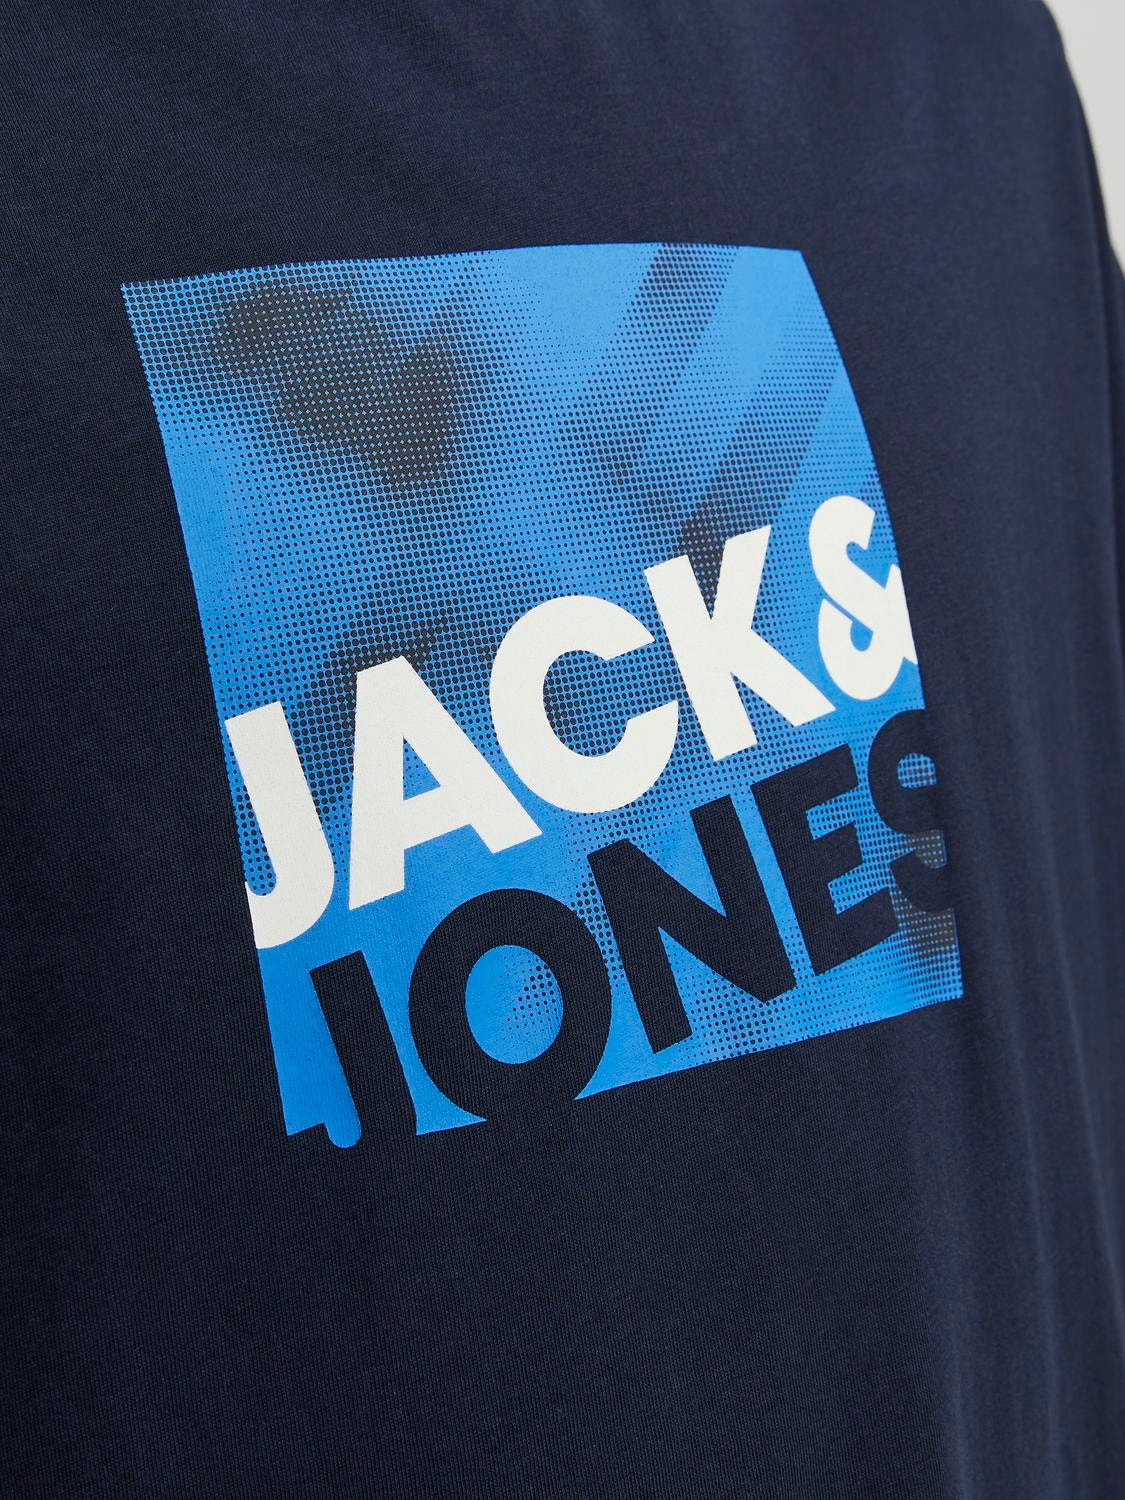 Jack & Jones Logo Crew neck T-shirt -Navy Blazer - 12246992